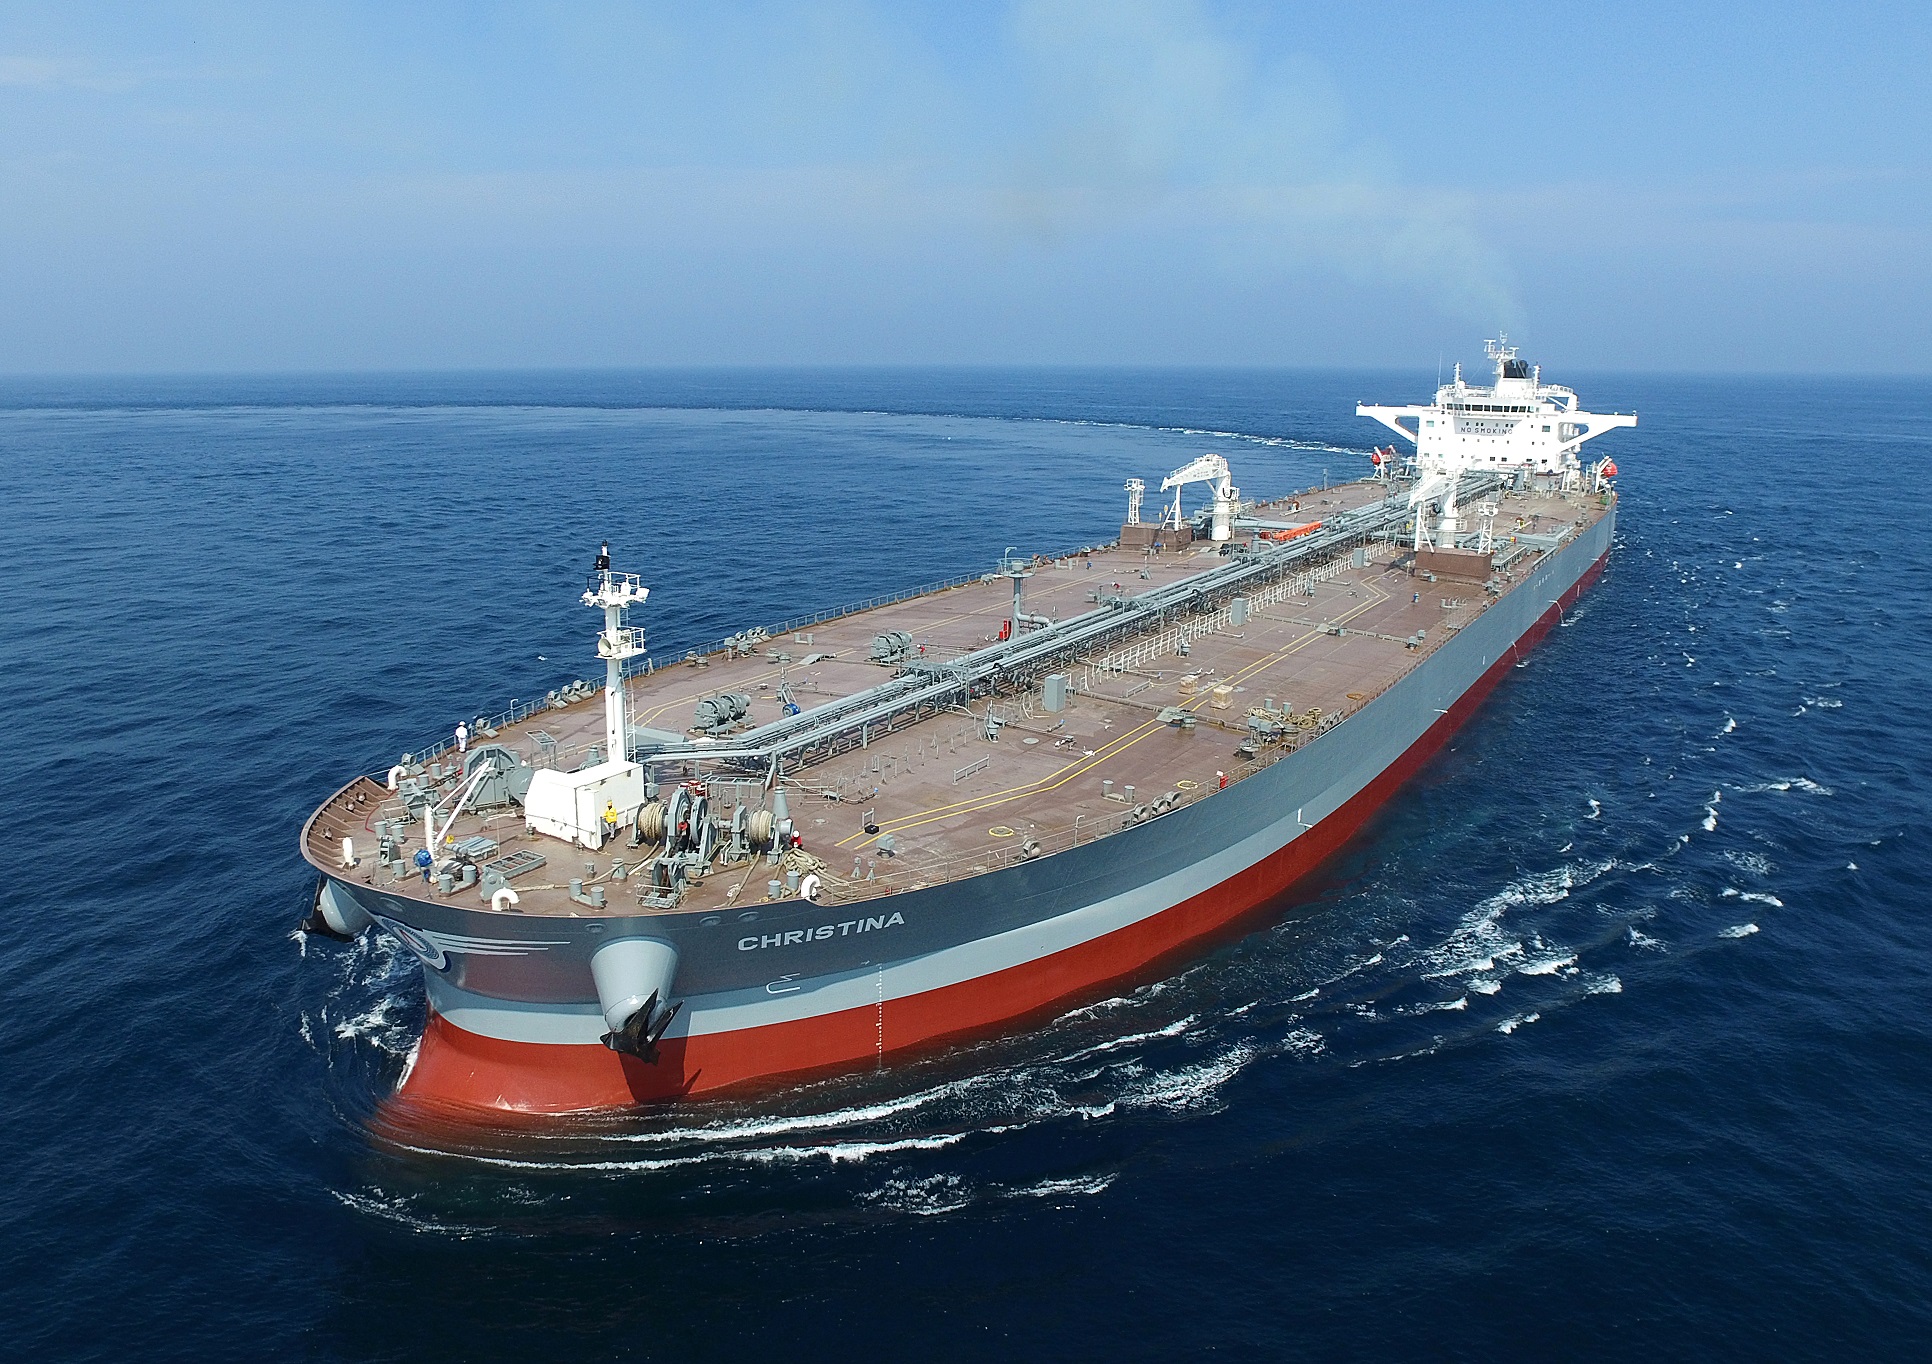 A 159,000-ton crude oil carrier built by Hyundai Heavy Industries